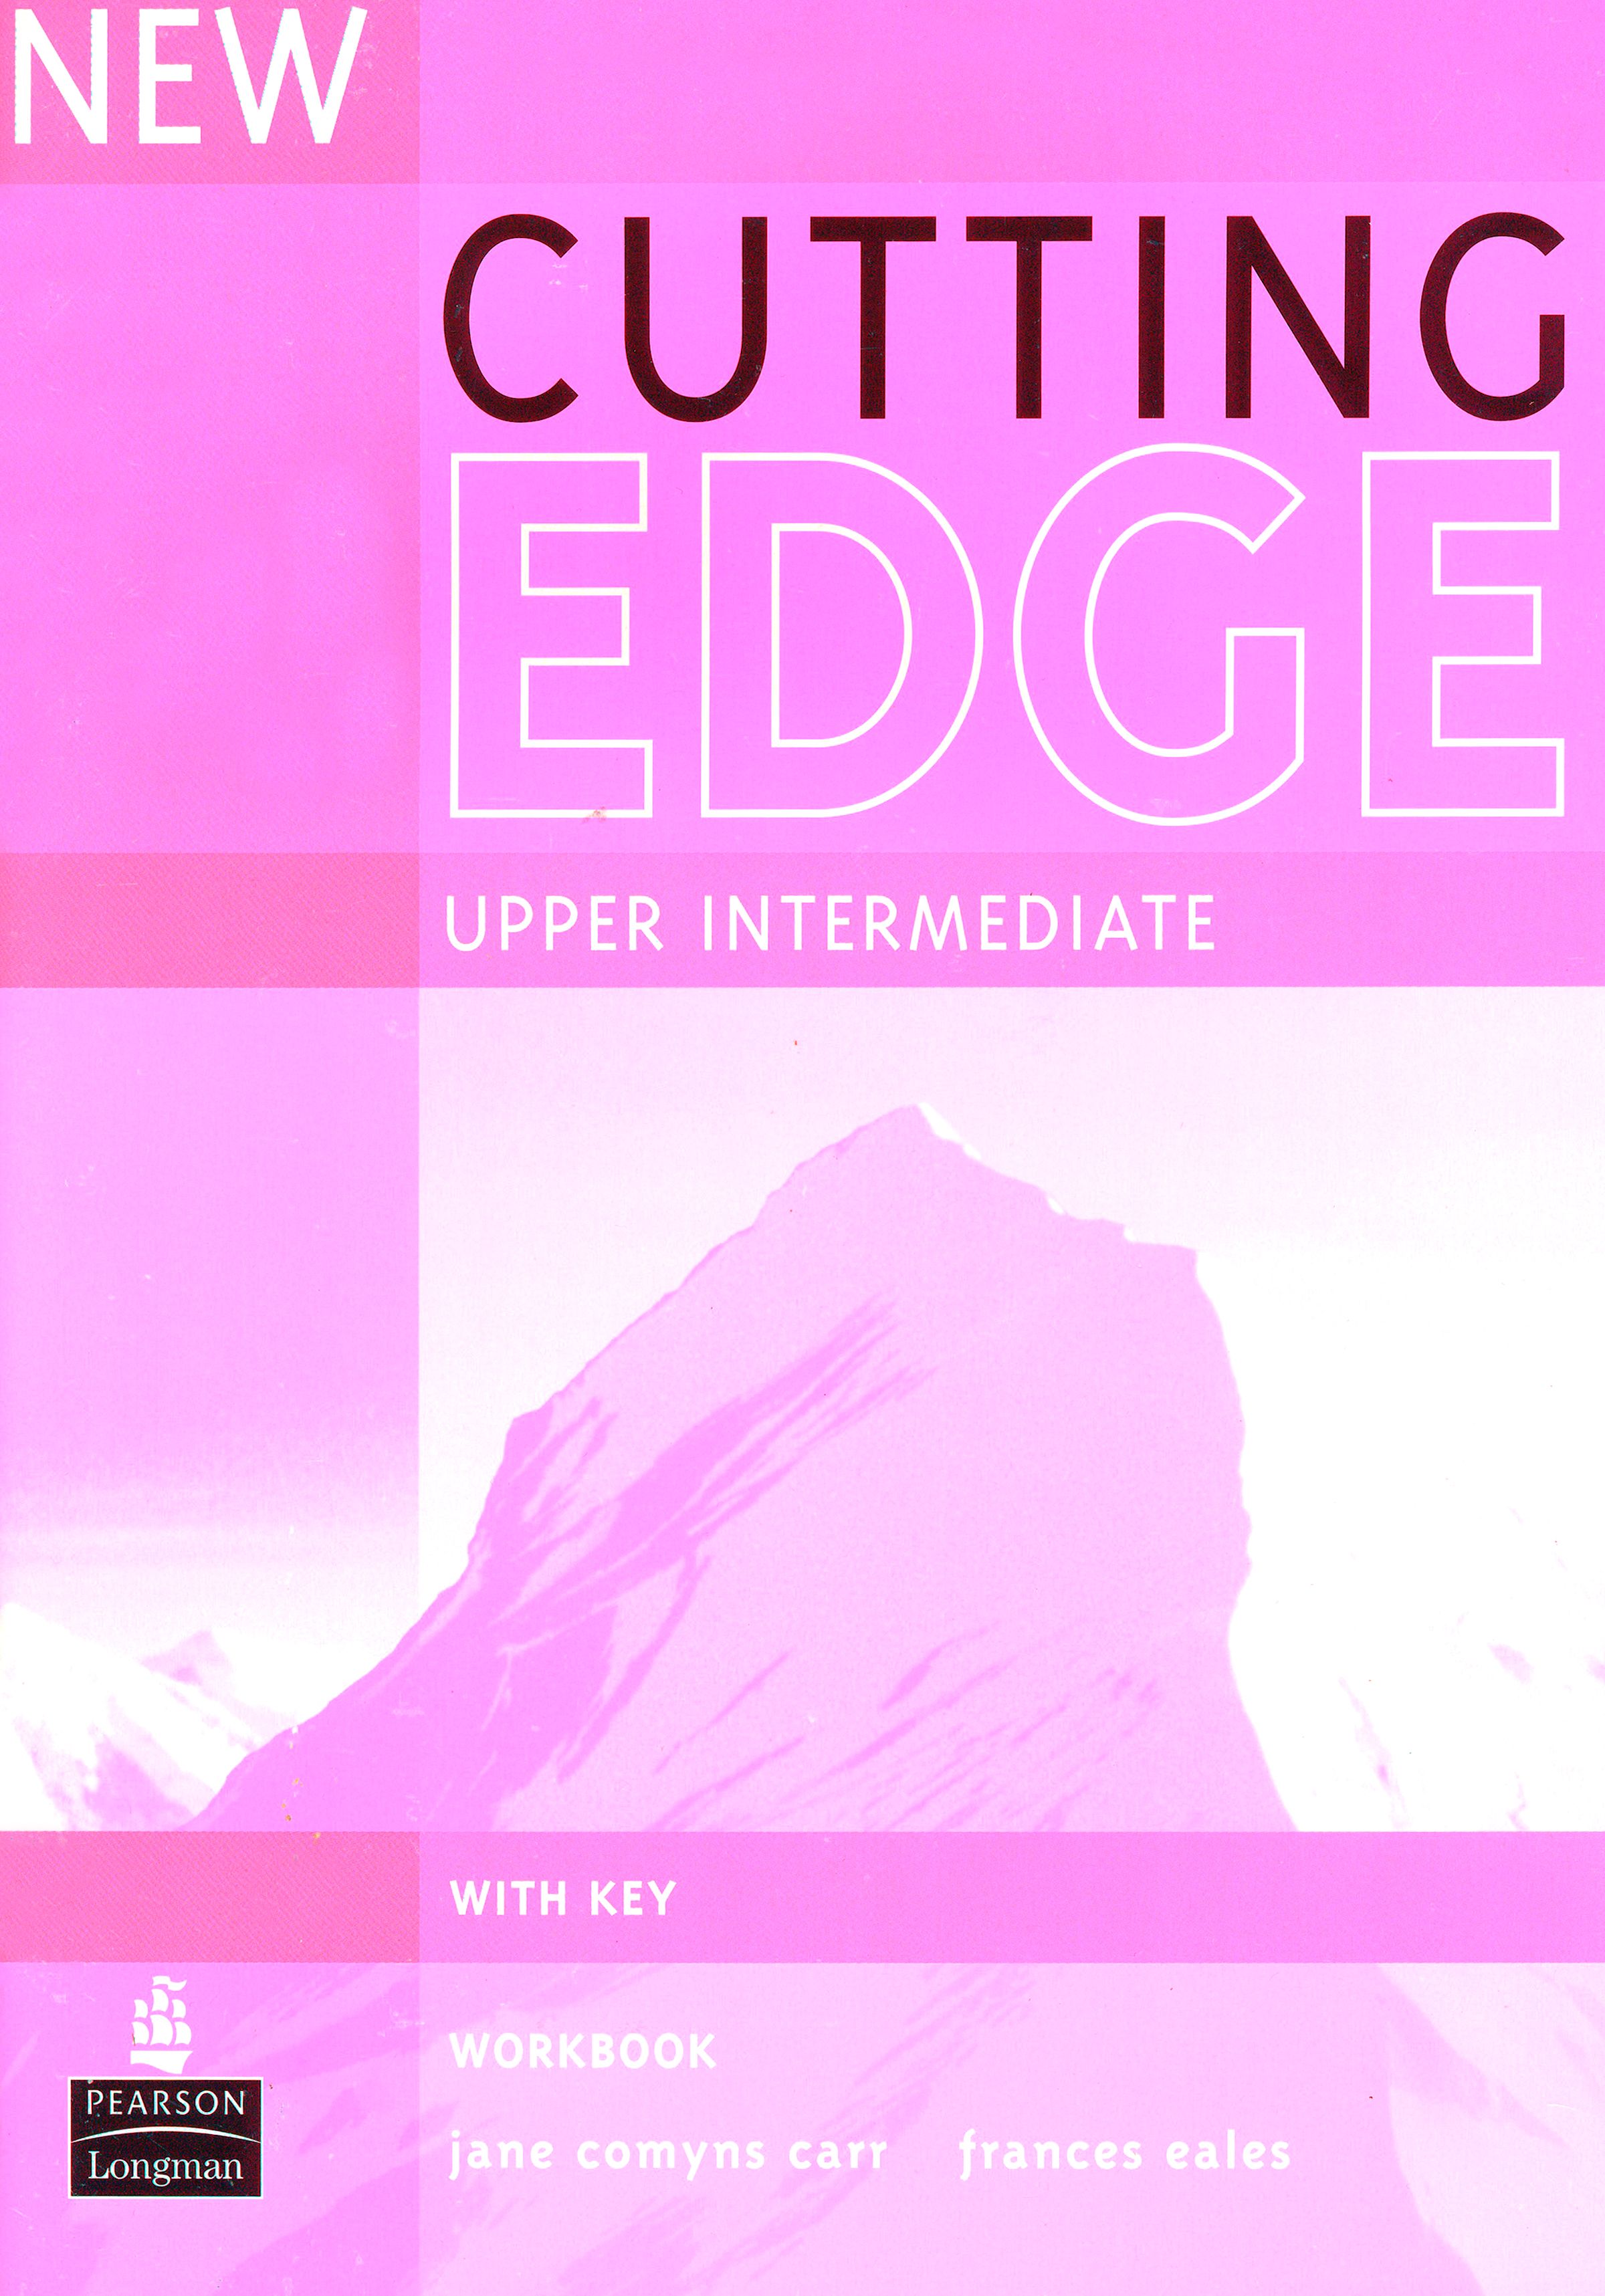 New cutting intermediate. New Cutting Edge Advanced. Cutting Edge Upper Intermediate Workbook Keys. New Cutting Edge Intermediate: Workbook 2007. Cutting Edge Upper Intermediate Workbook pdf Keys.